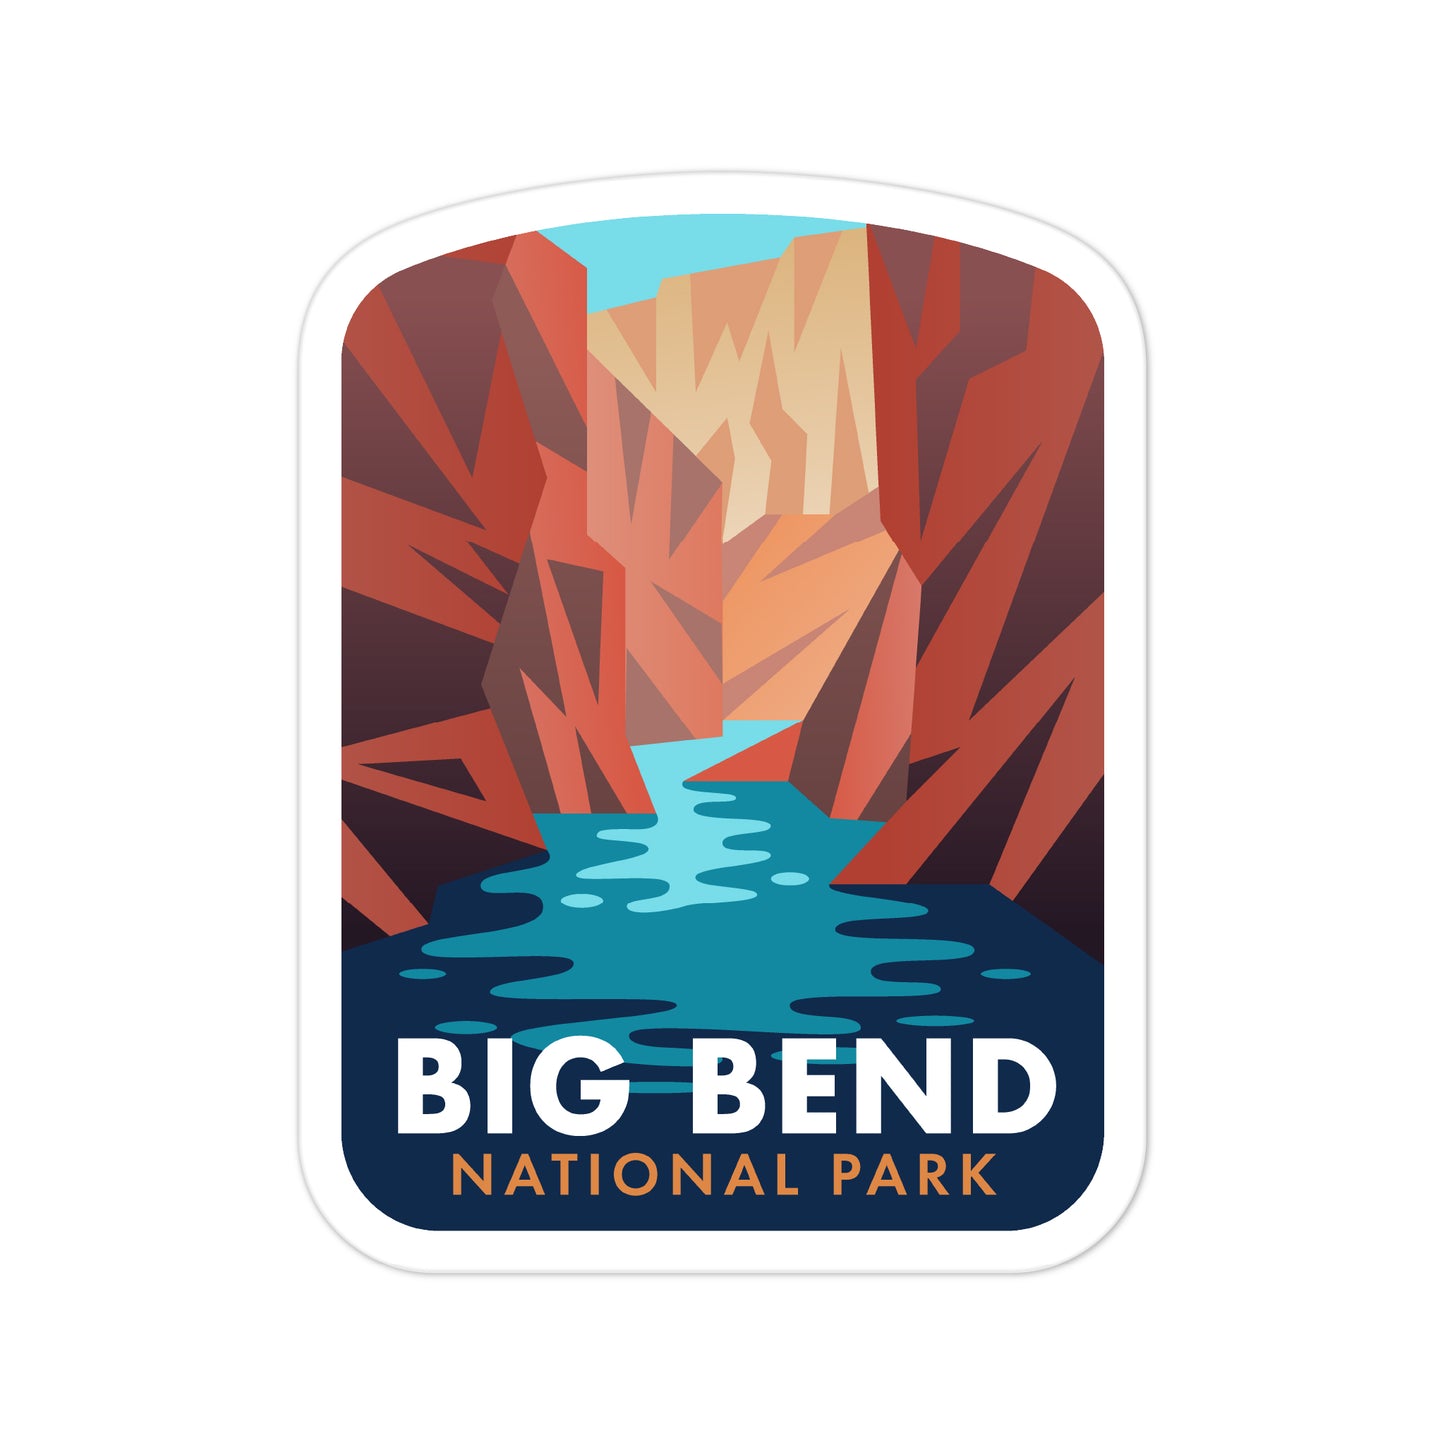 A sticker of Big Bend National Park